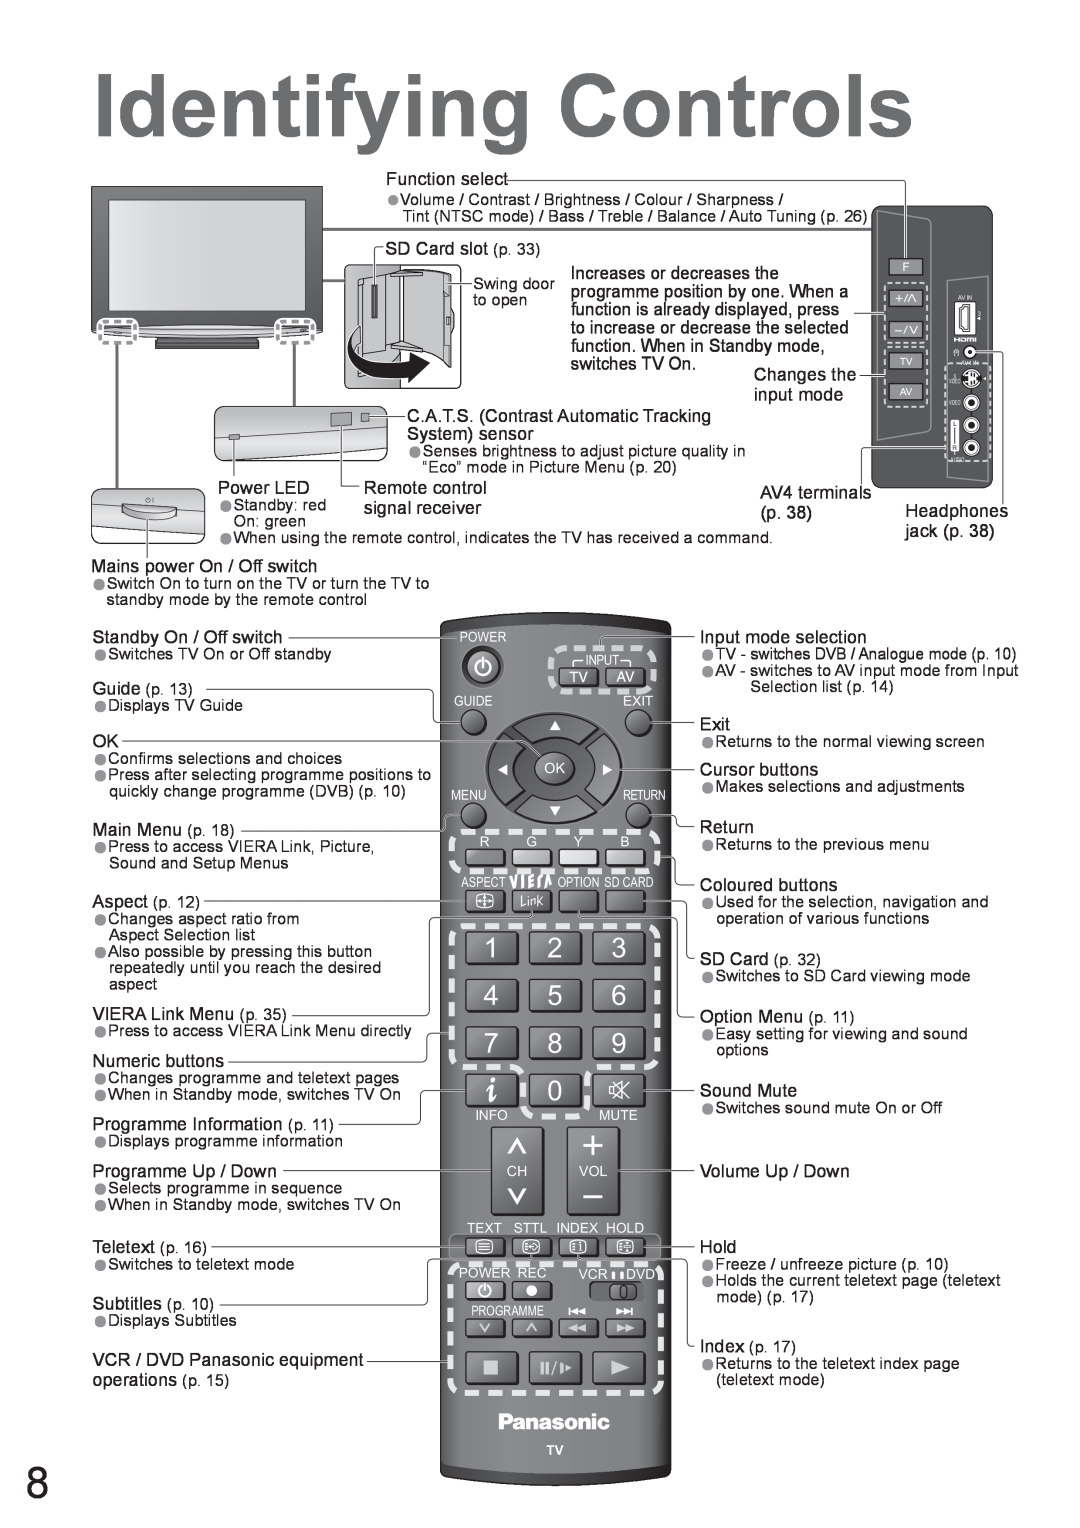 Panasonic TX-37LZD800A manual Identifying Controls, TV - switches DVB / Analogue mode p, quickly change programme DVB p 